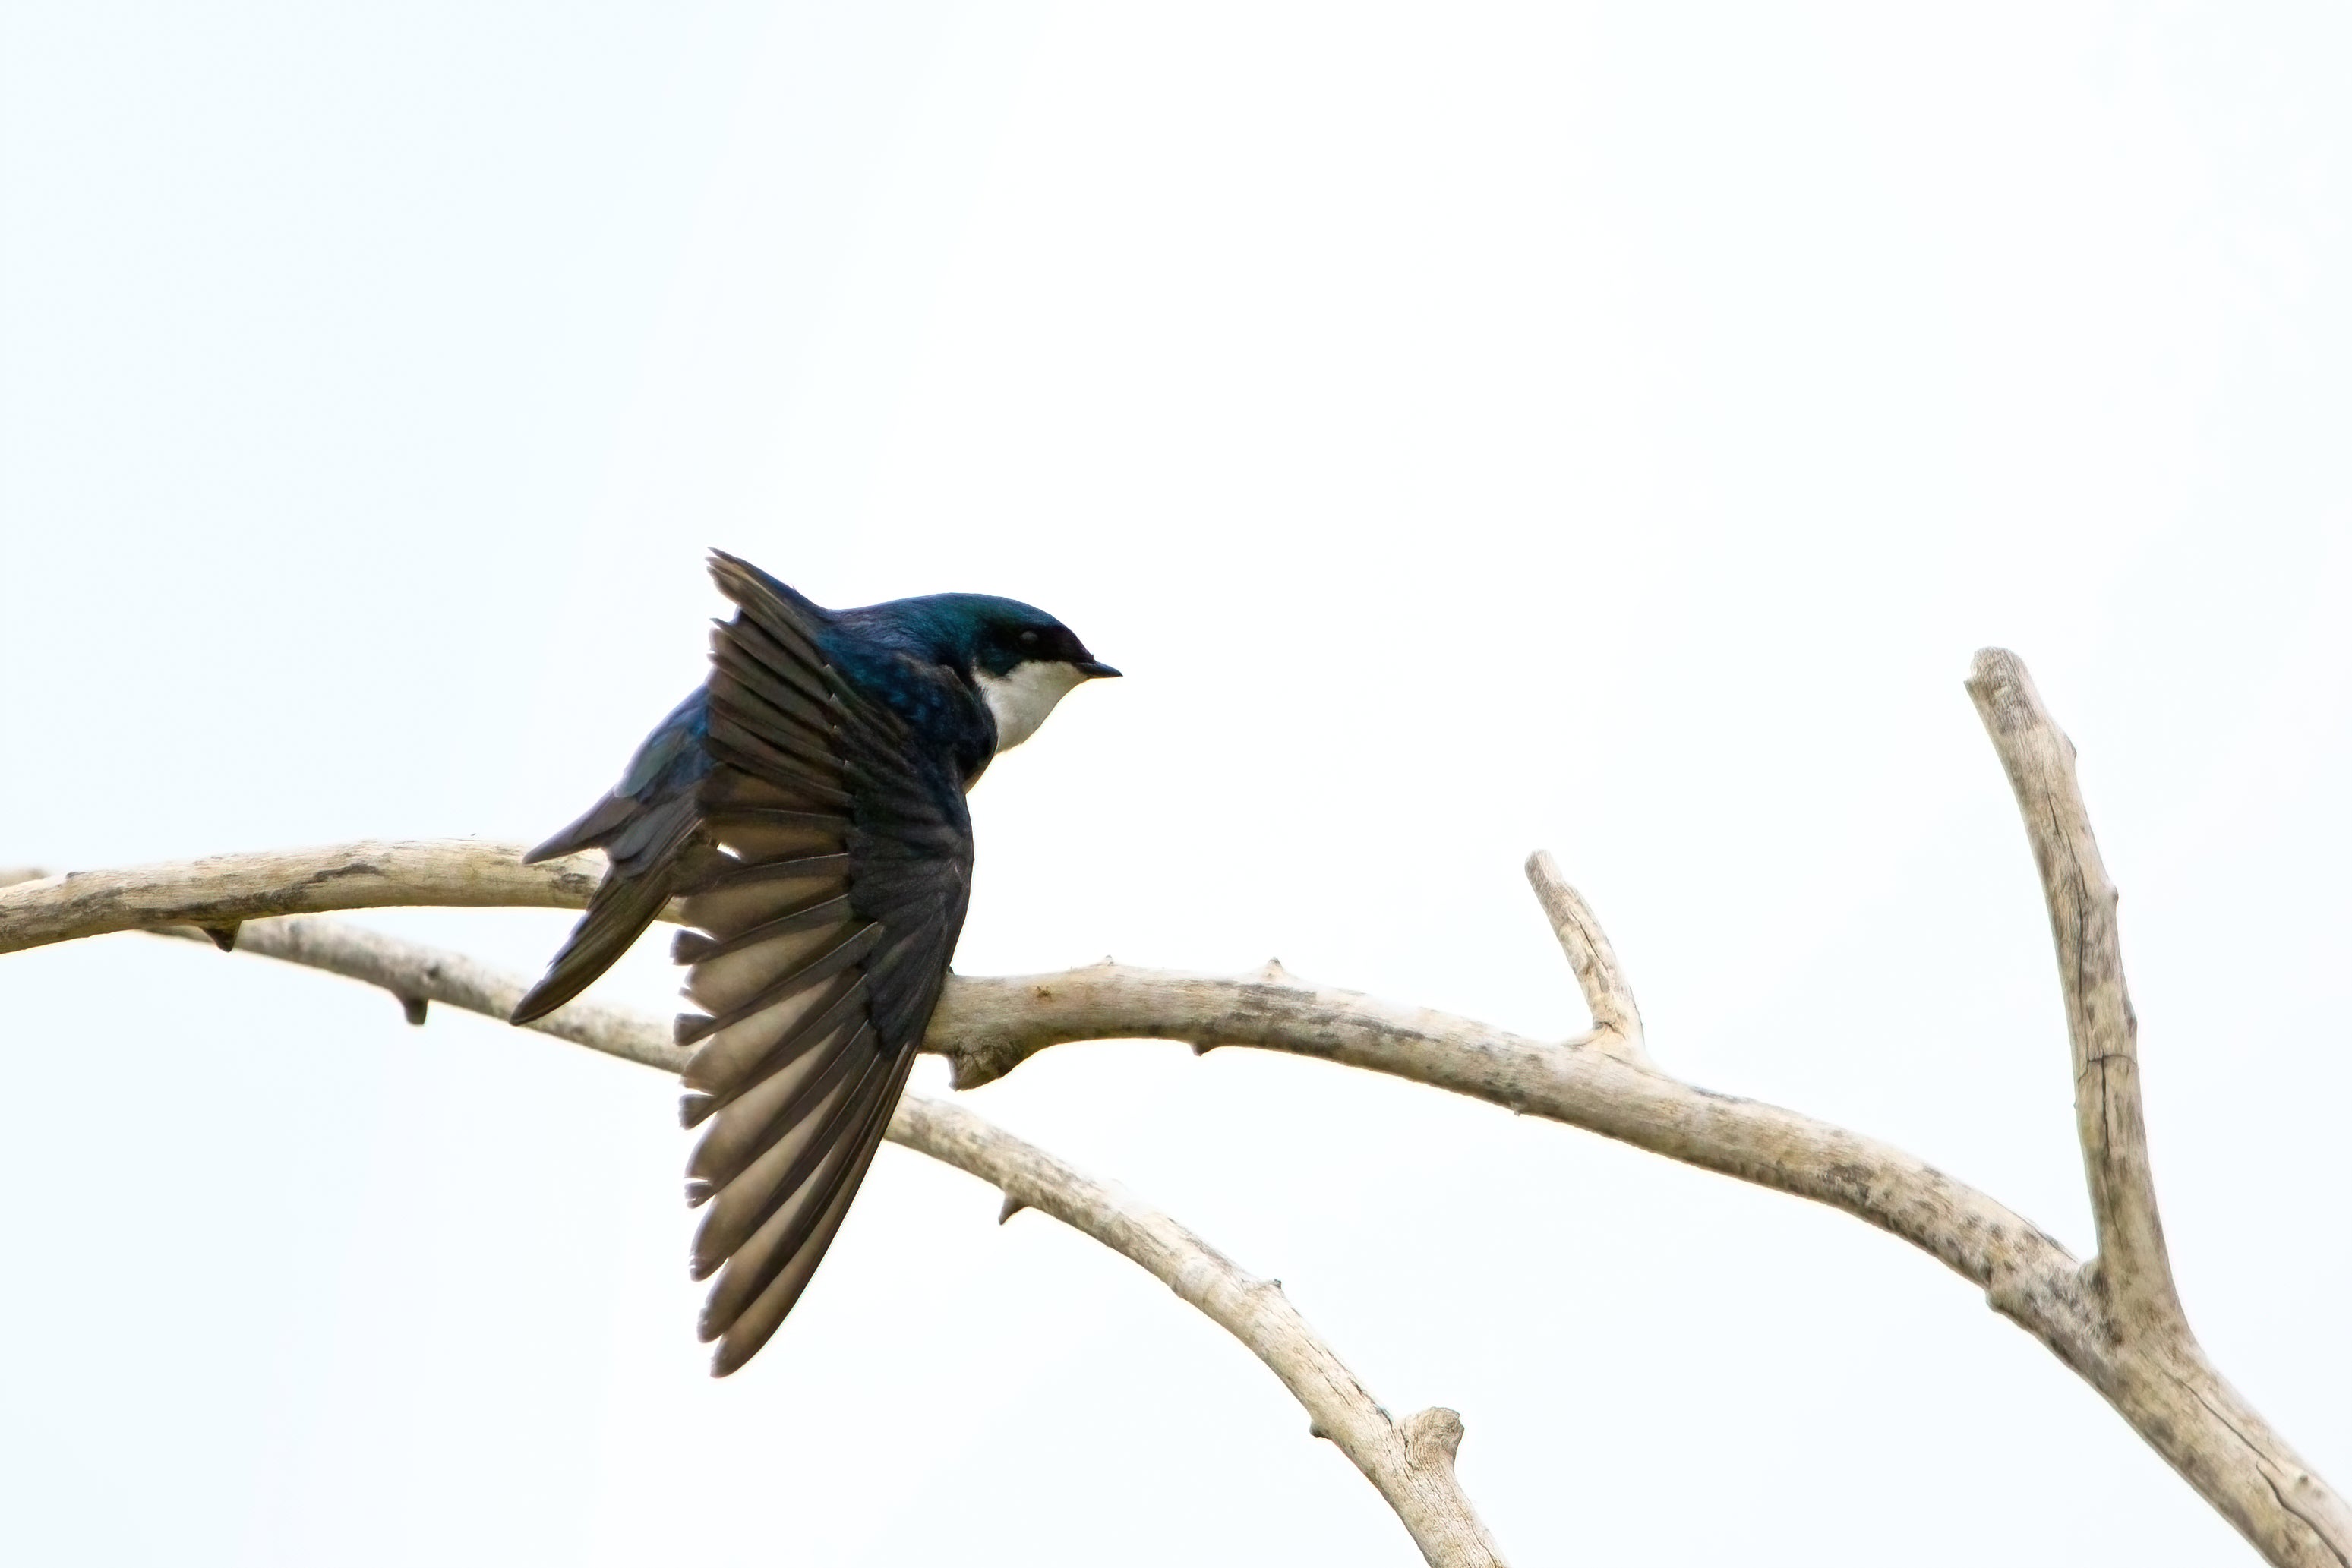 Tree Swallow taking flight from a branch